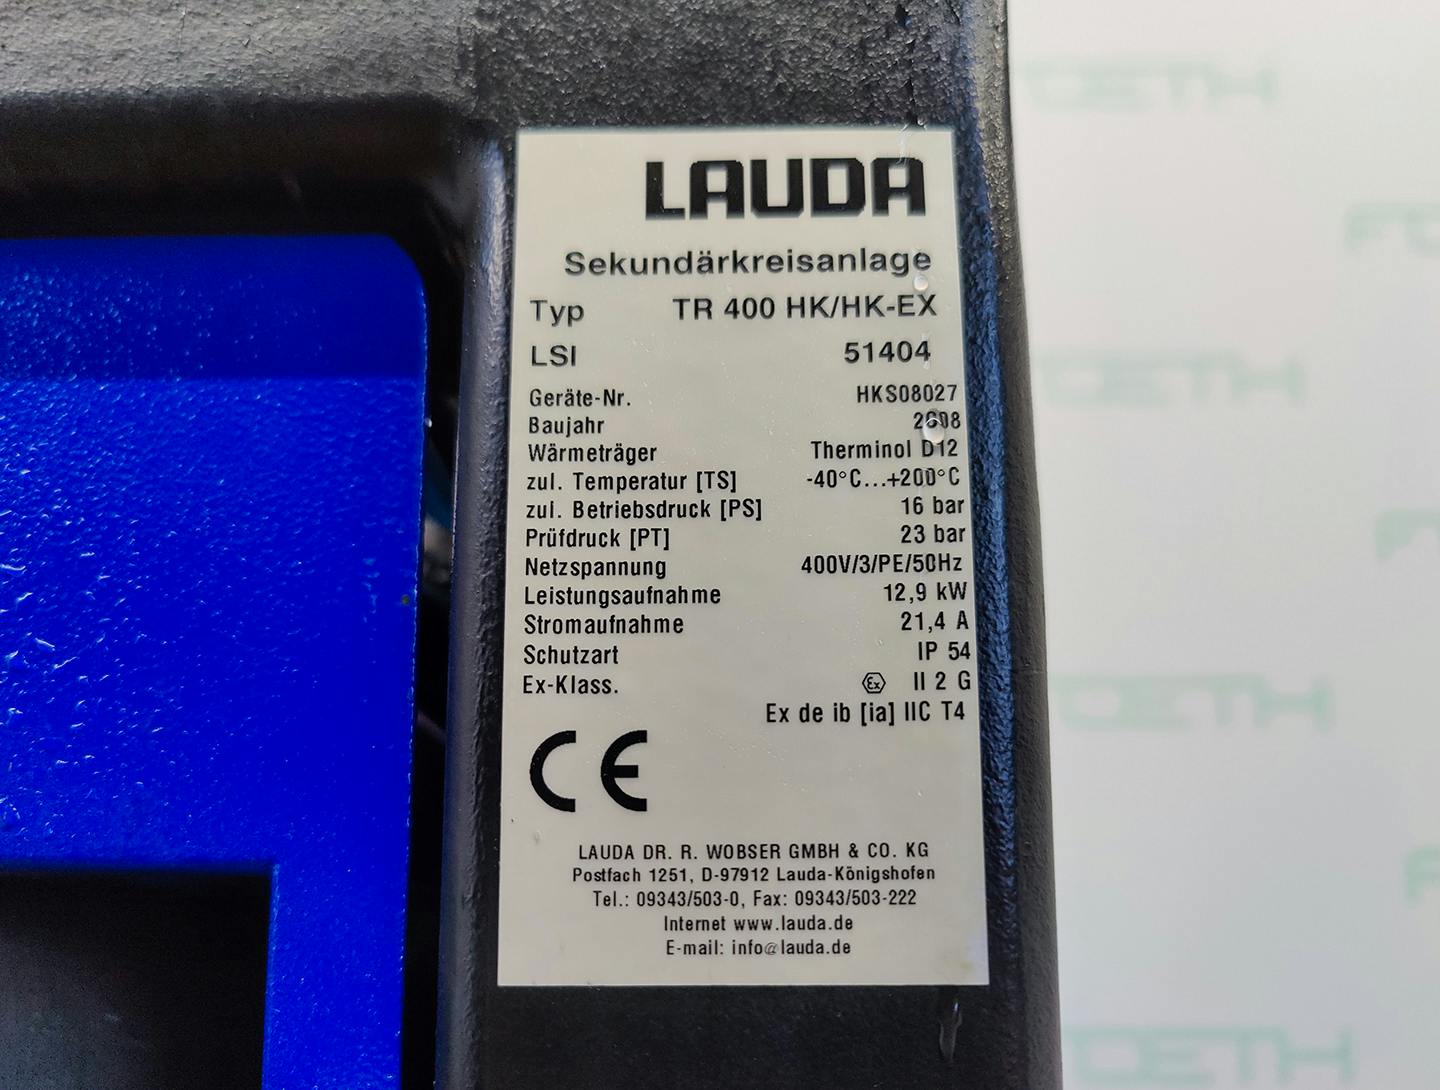 Lauda TR400 HK/HK-EX "secondary circuit system" - циркуляционный термостат - image 6